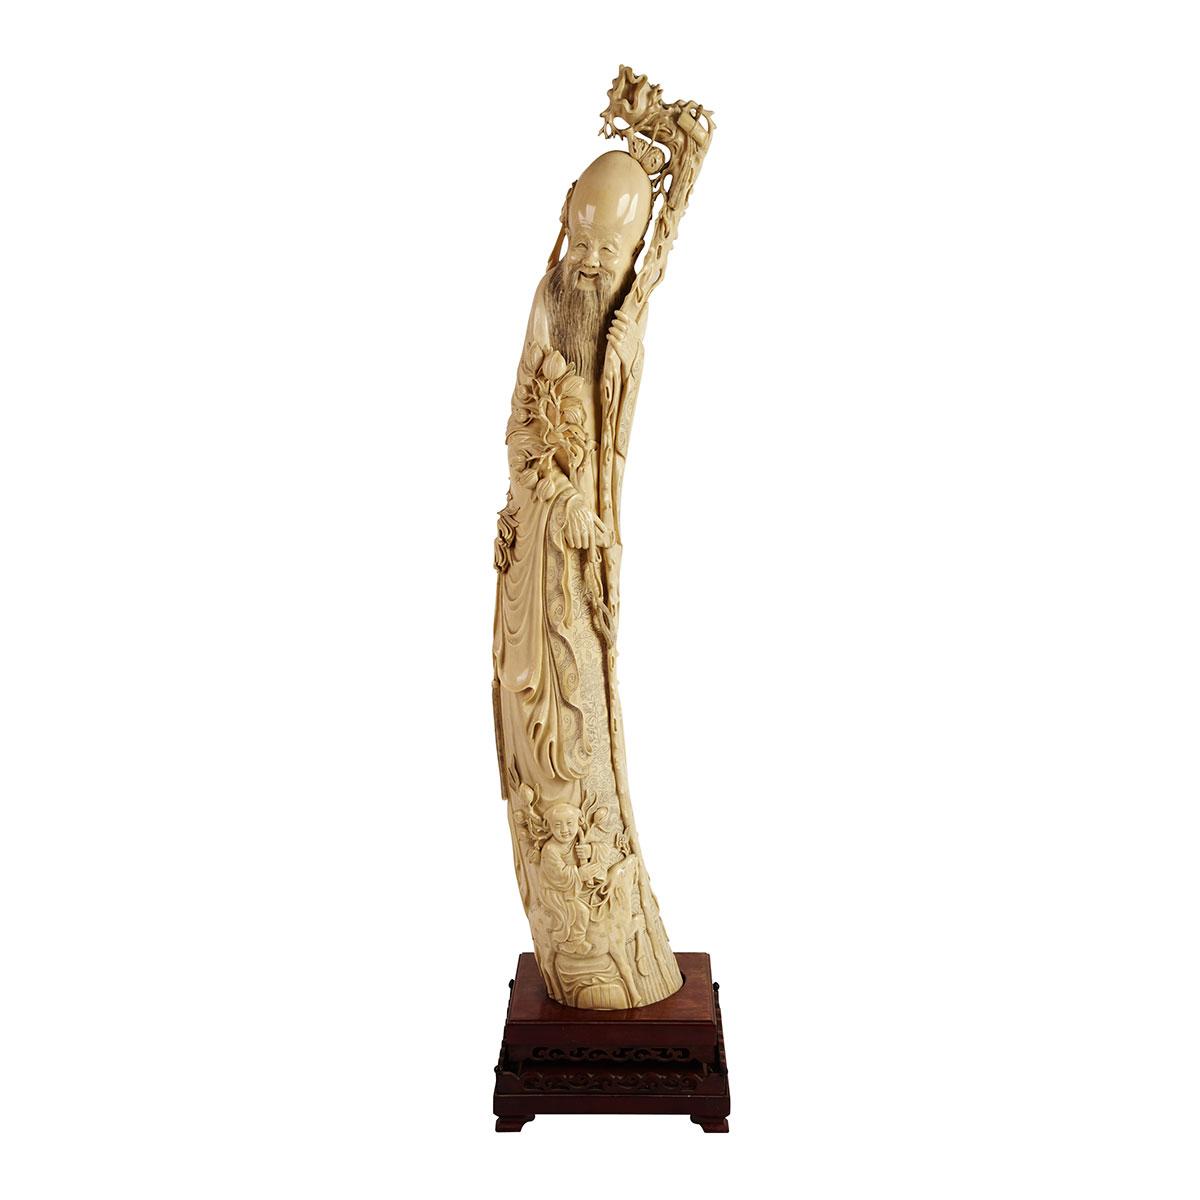 Massive Ivory Carved Immortal